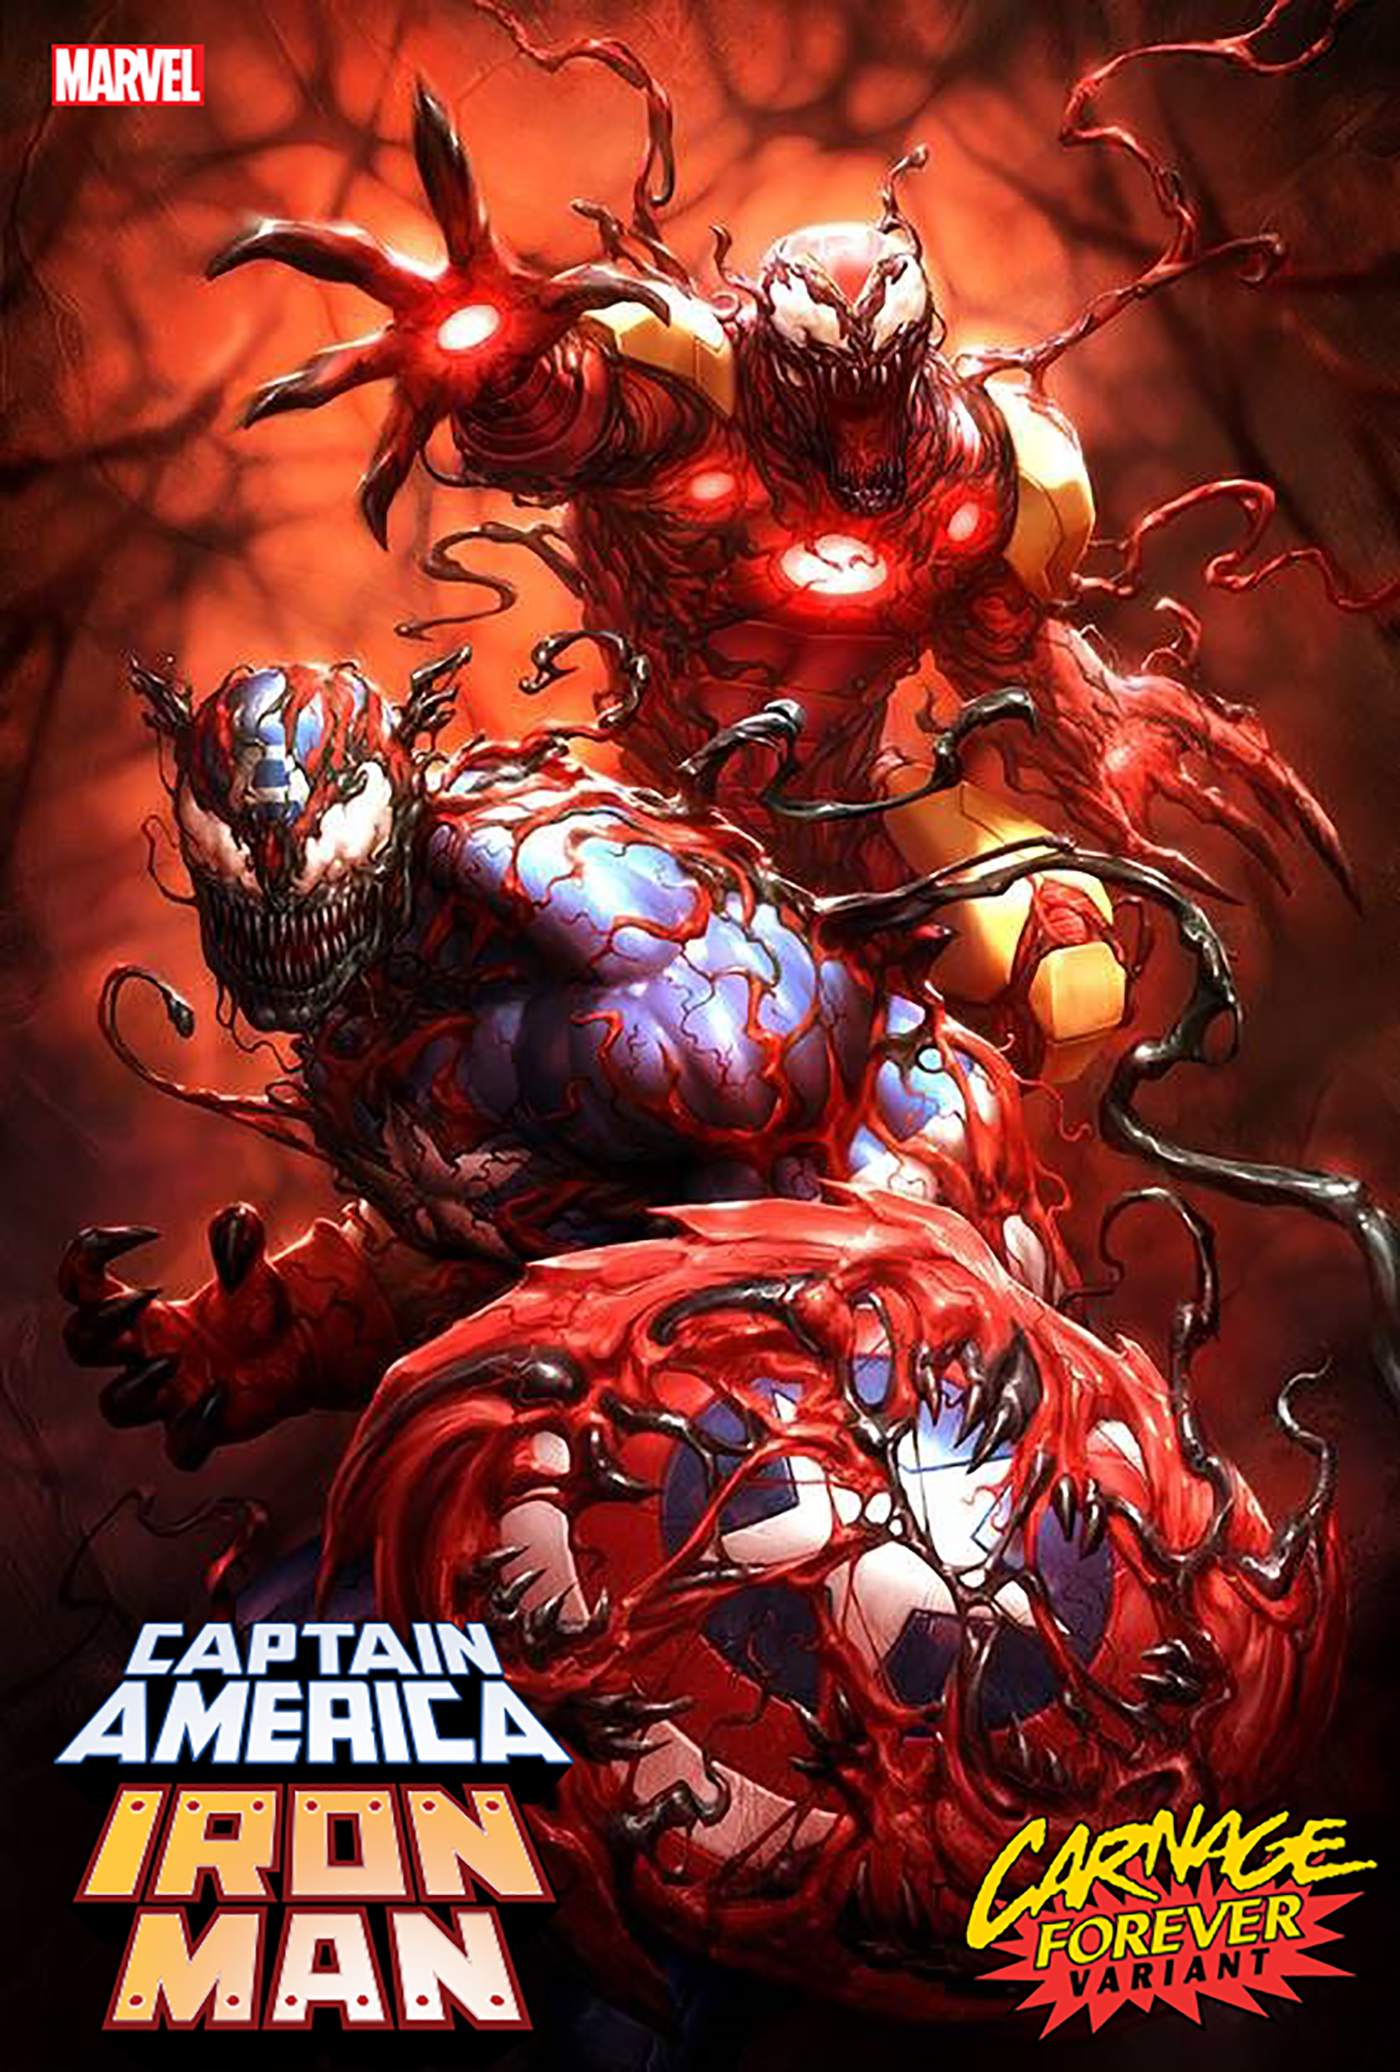 Captain America Iron Man #5 C Kendrik Lim Kunkka Carnage Forever Variant (03/23/2022) Marvel